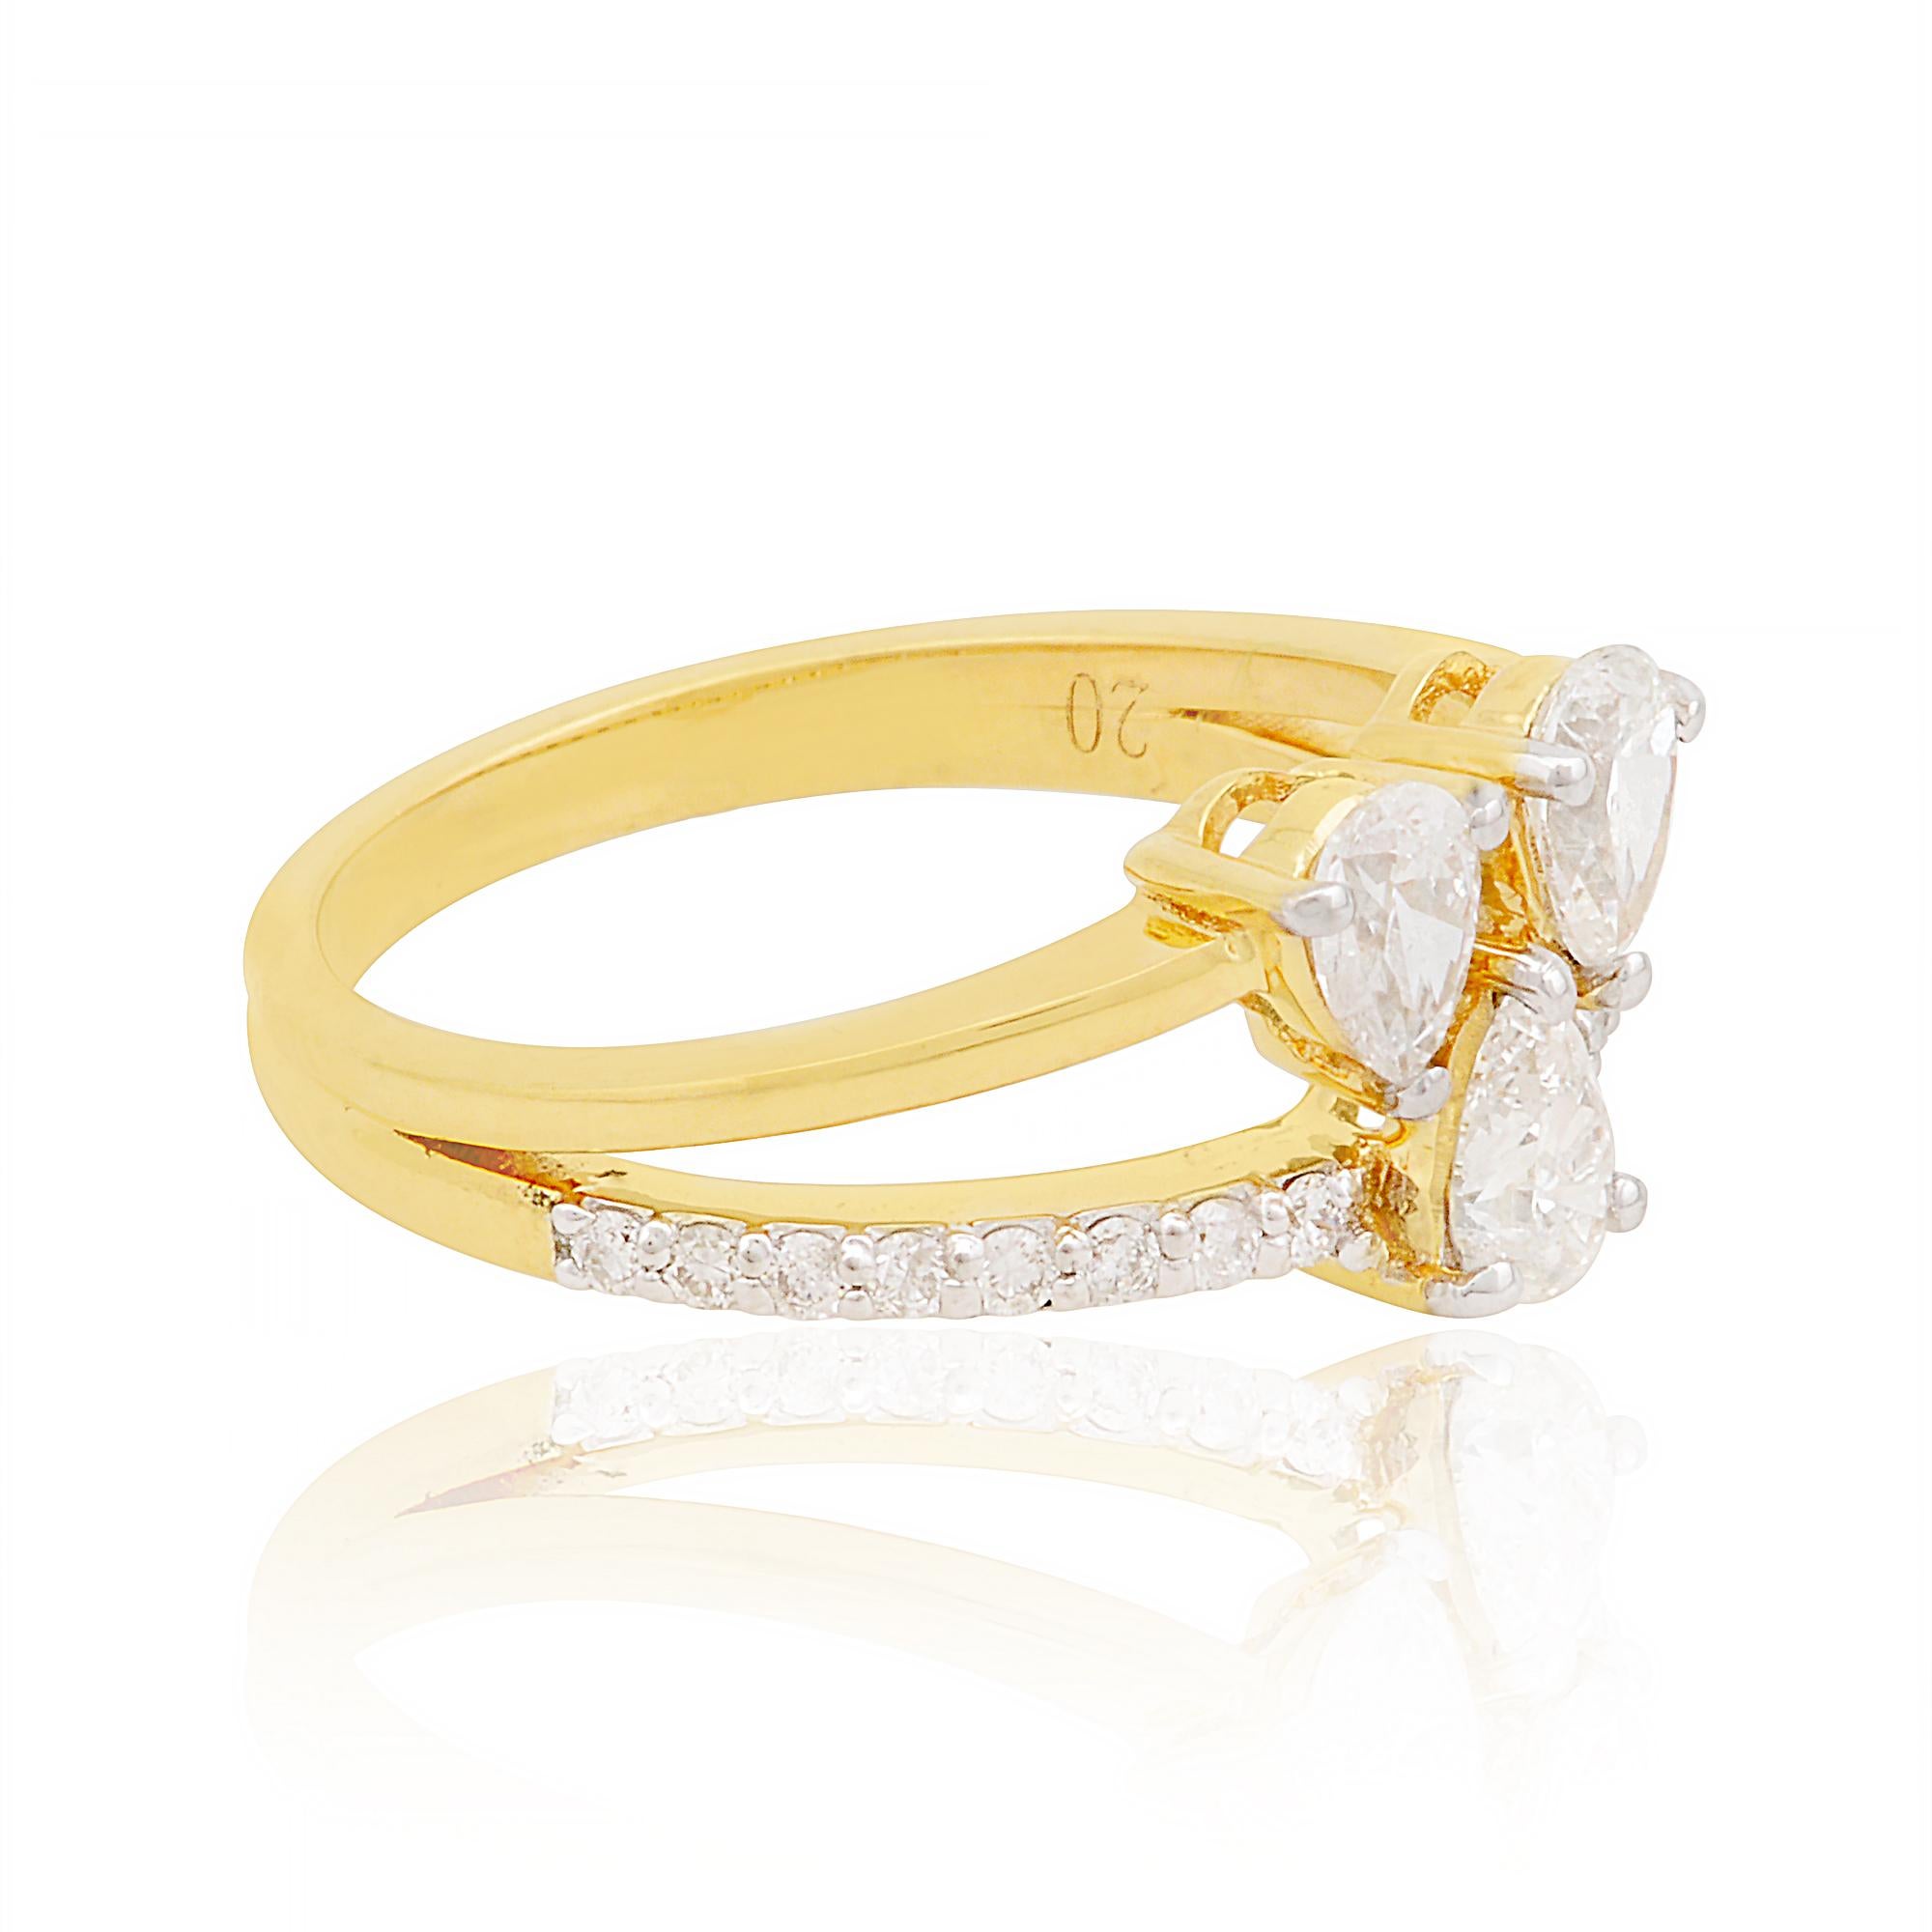 Modern Real 0.90 Carat Pear Diamond Wedding Ring Solid 18k Yellow Gold Handmade Jewelry